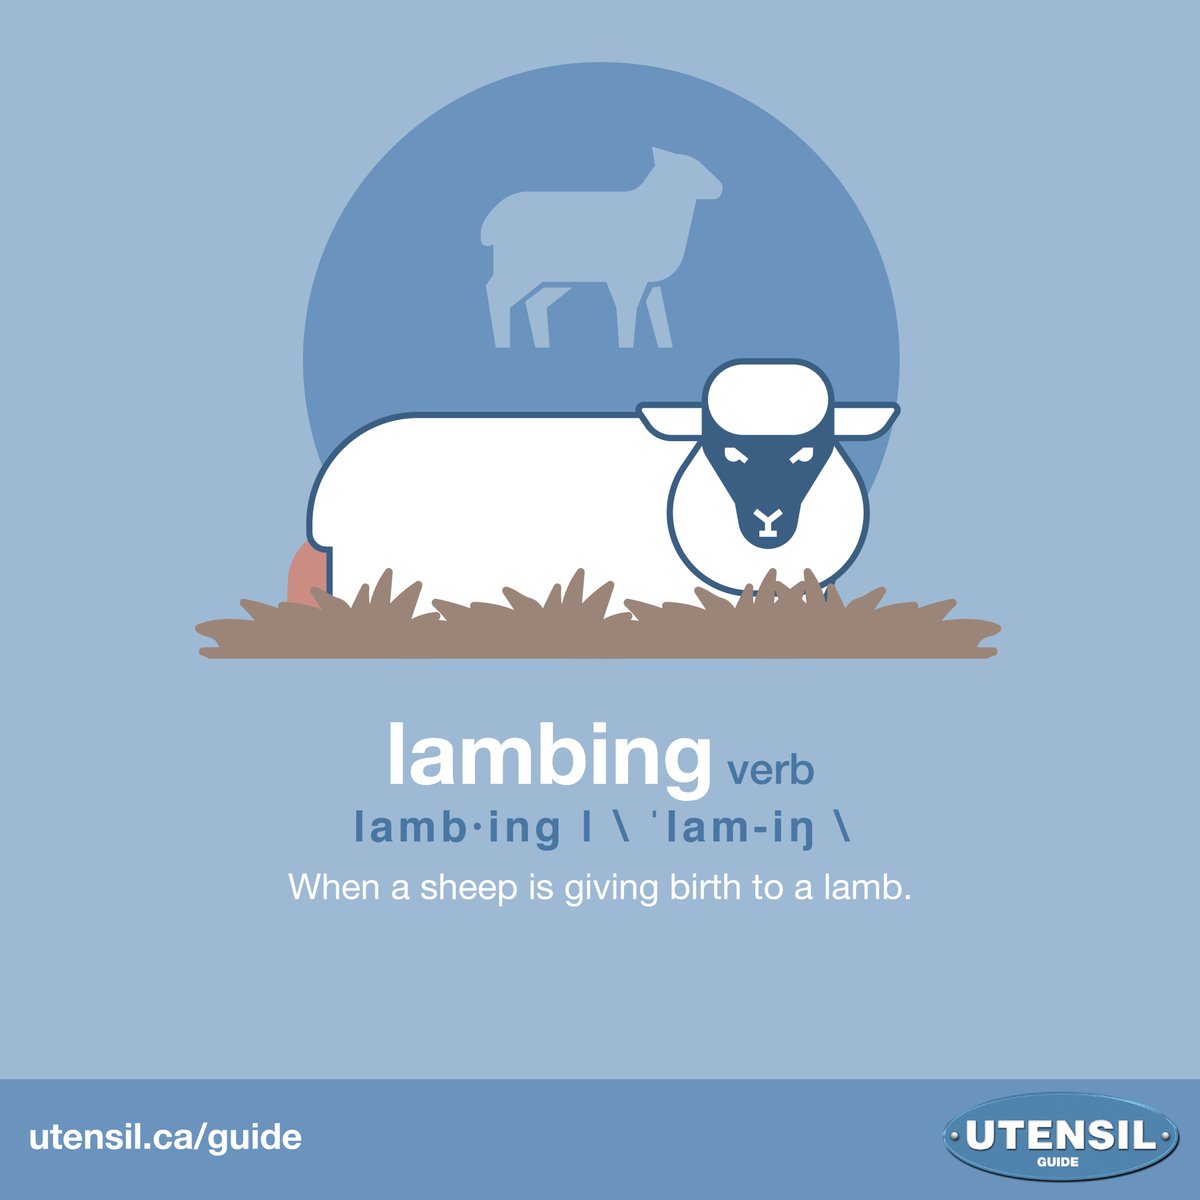 LAMBING (verb) When a sheep is giving birth to a lamb. #UtensilGuide #CdnAg #CdnFood Learn more food & farming terms at: utensil.ca/guide